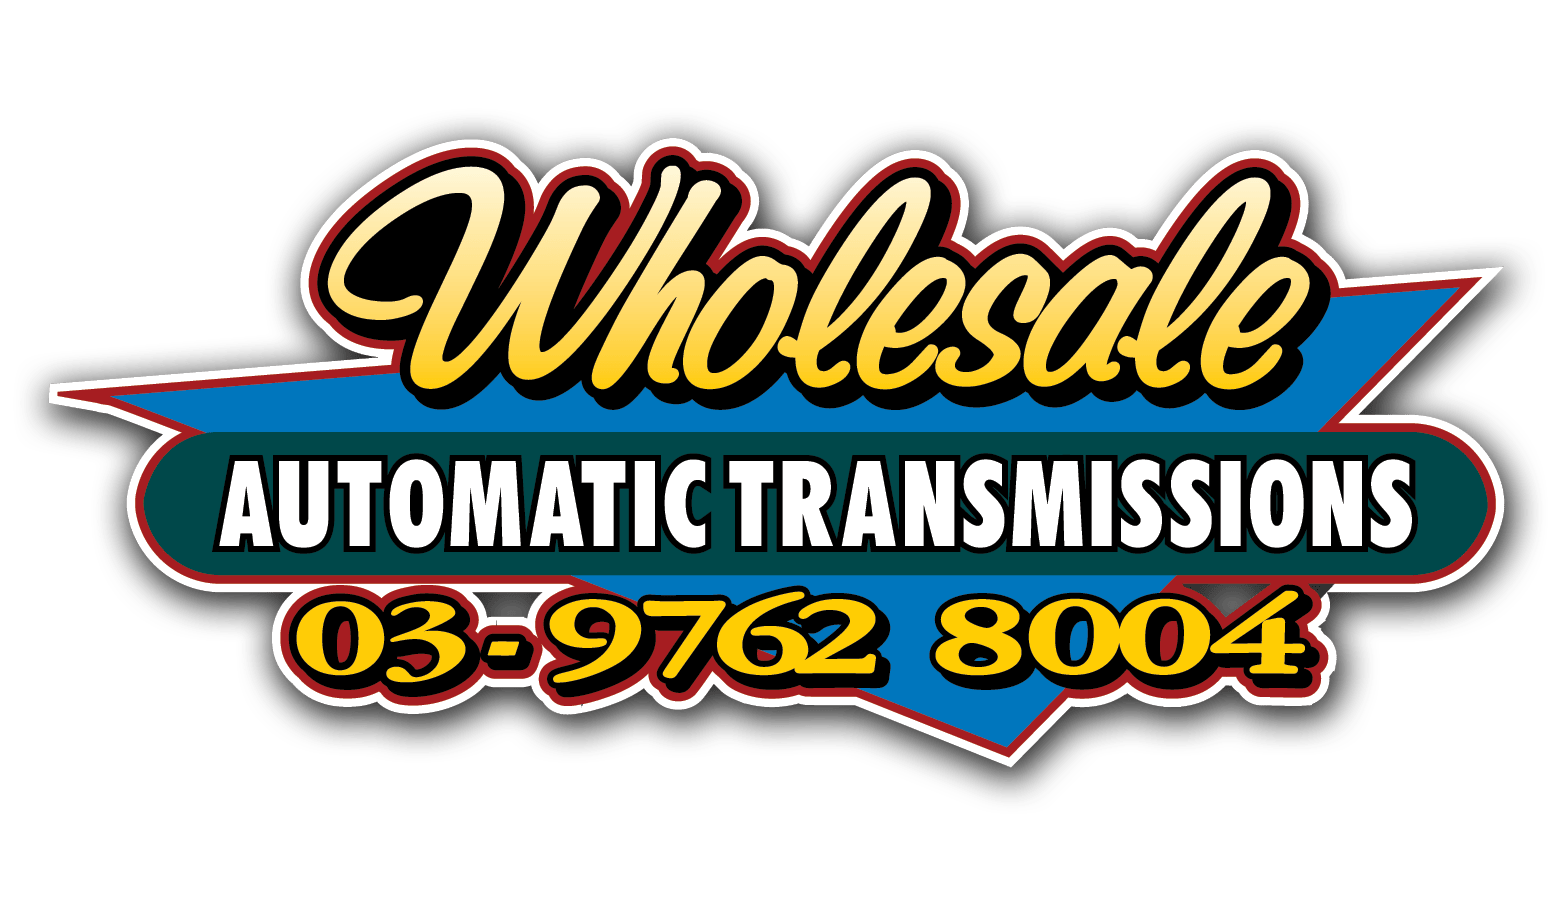 Wholesale Automatic Transmissions